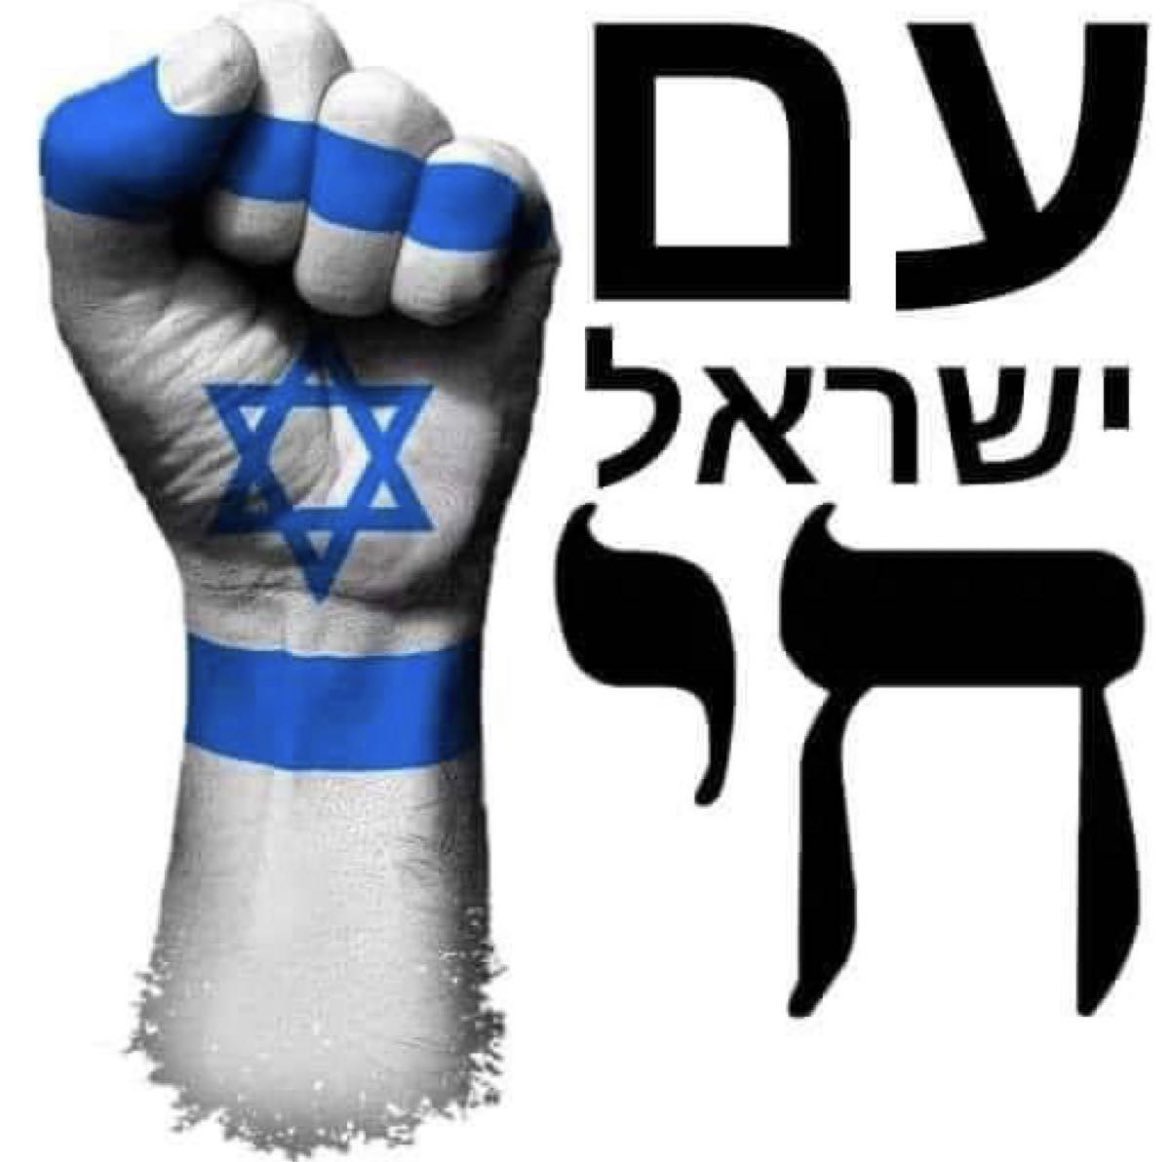 Victory for Israel! #JewPower
#JewishPride #JewishPower

-We will not tolerate Radical islamic terror